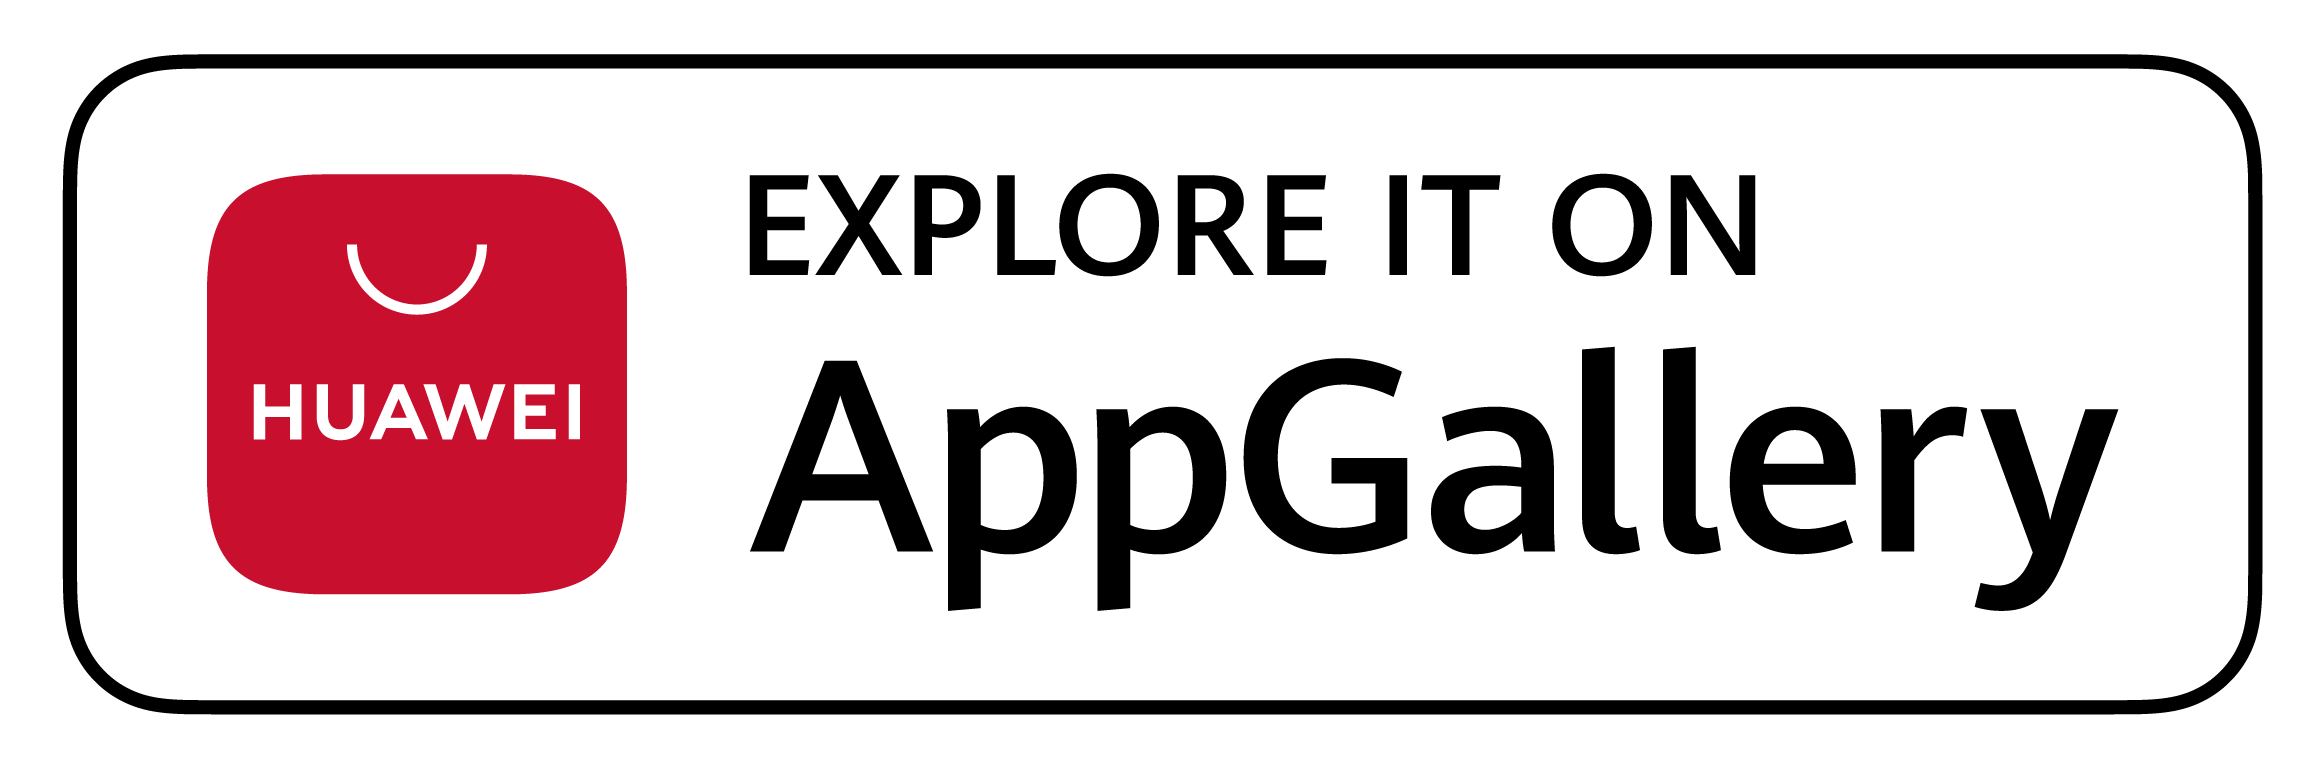 Https appgallery huawei ru. App Gallery логотип. Откройте в app Gallery logo. Доступно в app Gallery. Загрузите в app Gallery.